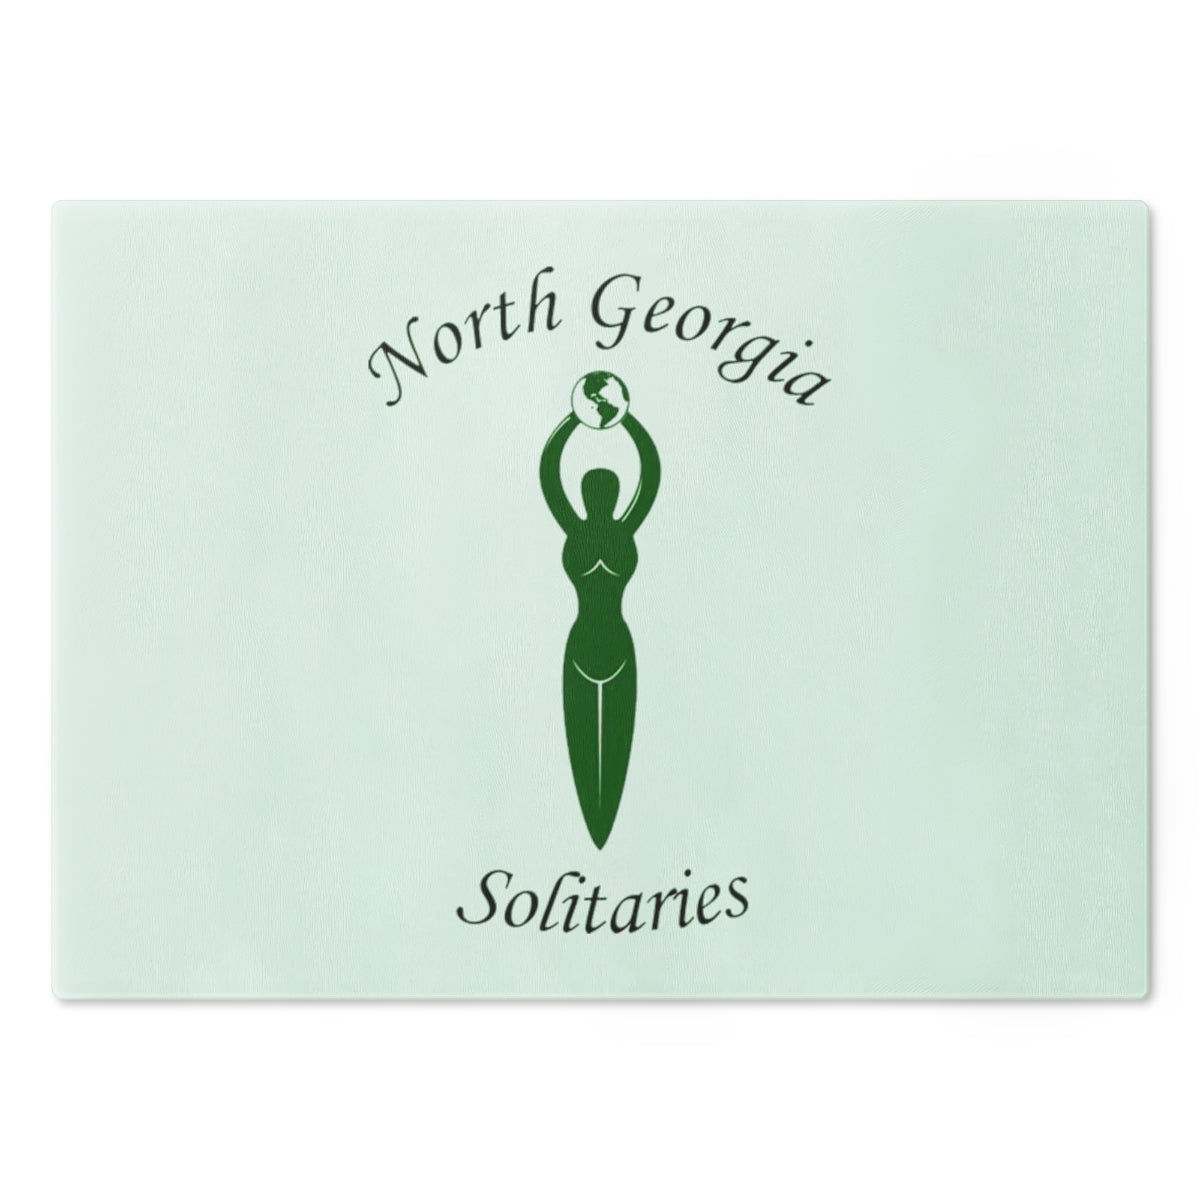 North Georgia Solitaries Cutting Board